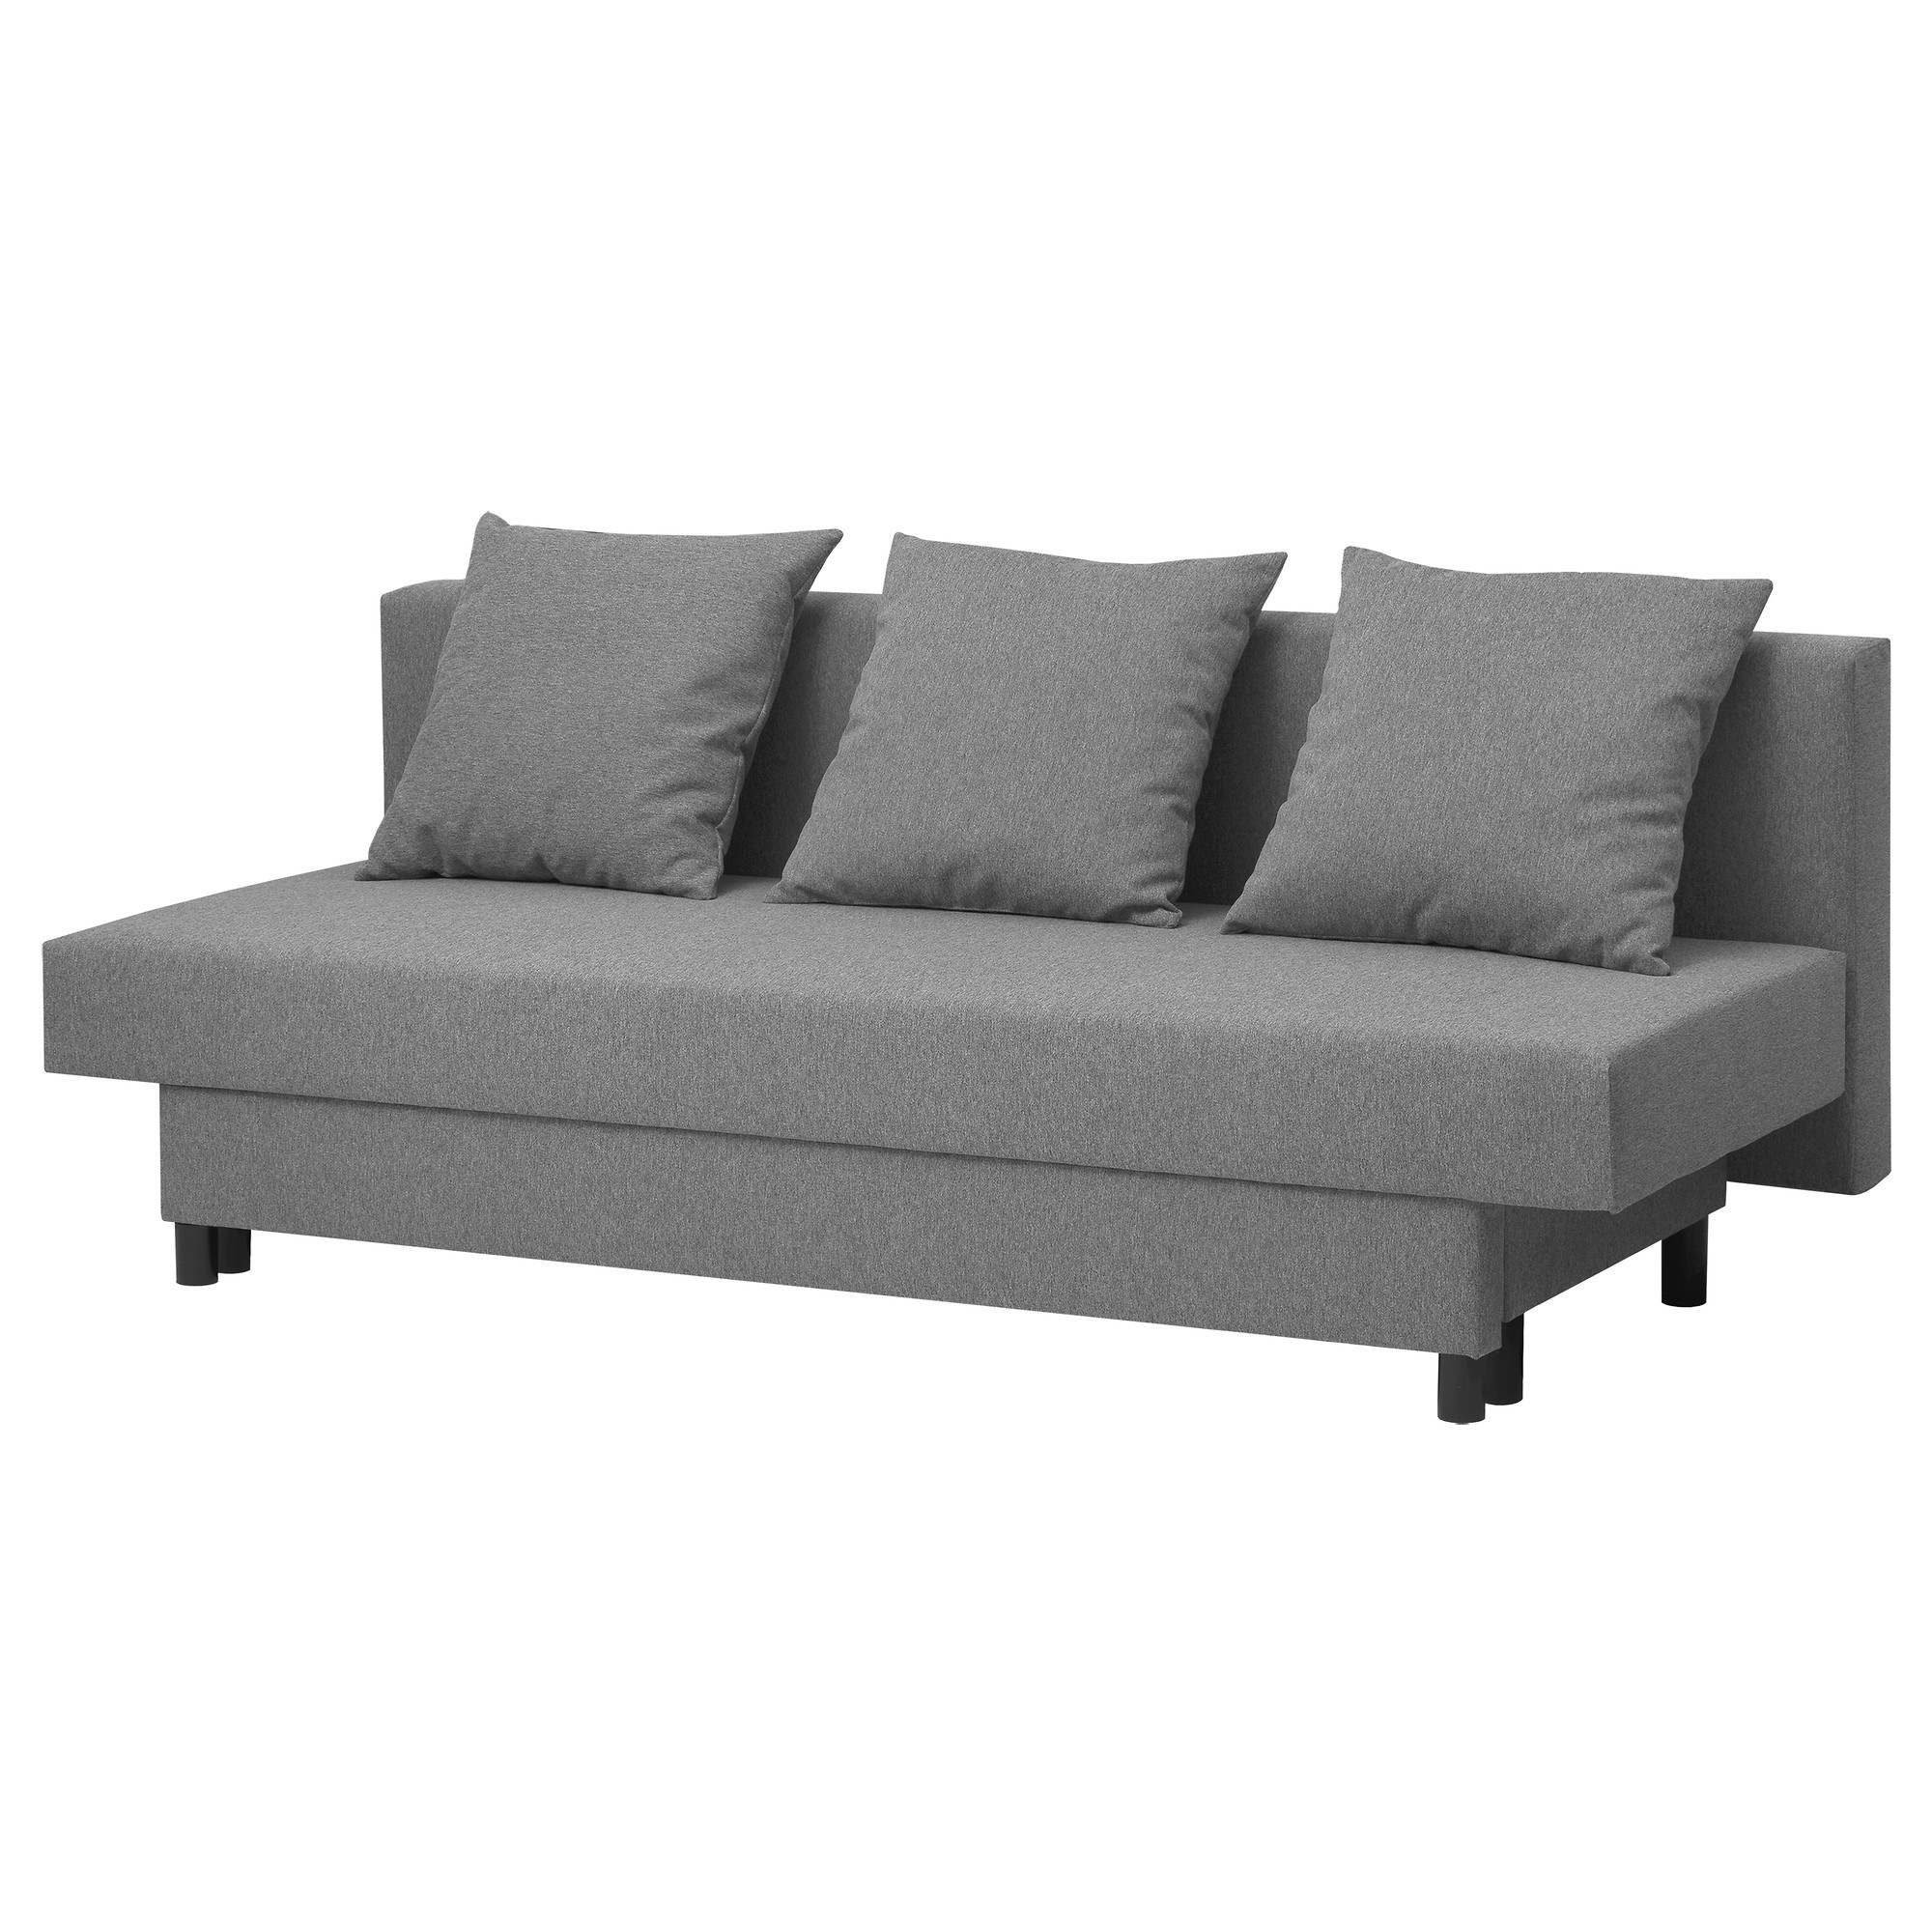 Kleine Couch Ikea concernant Futon Ikea 1 Place